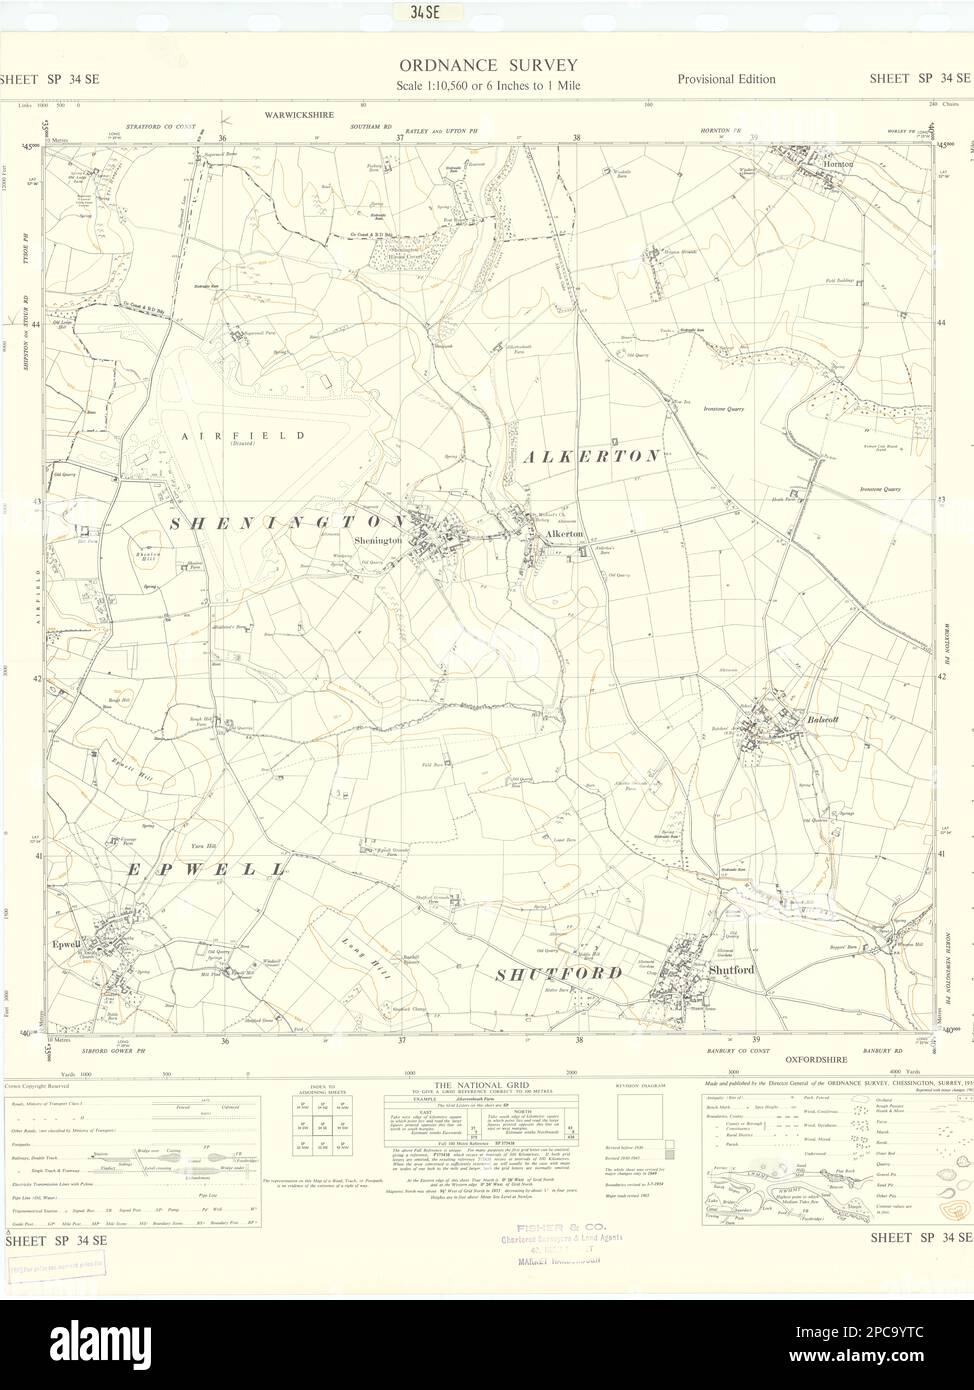 Ordnance Survey SP34SE Warks Shutford Shenington Epwell Alkerton 1955 mapa antiguo Foto de stock